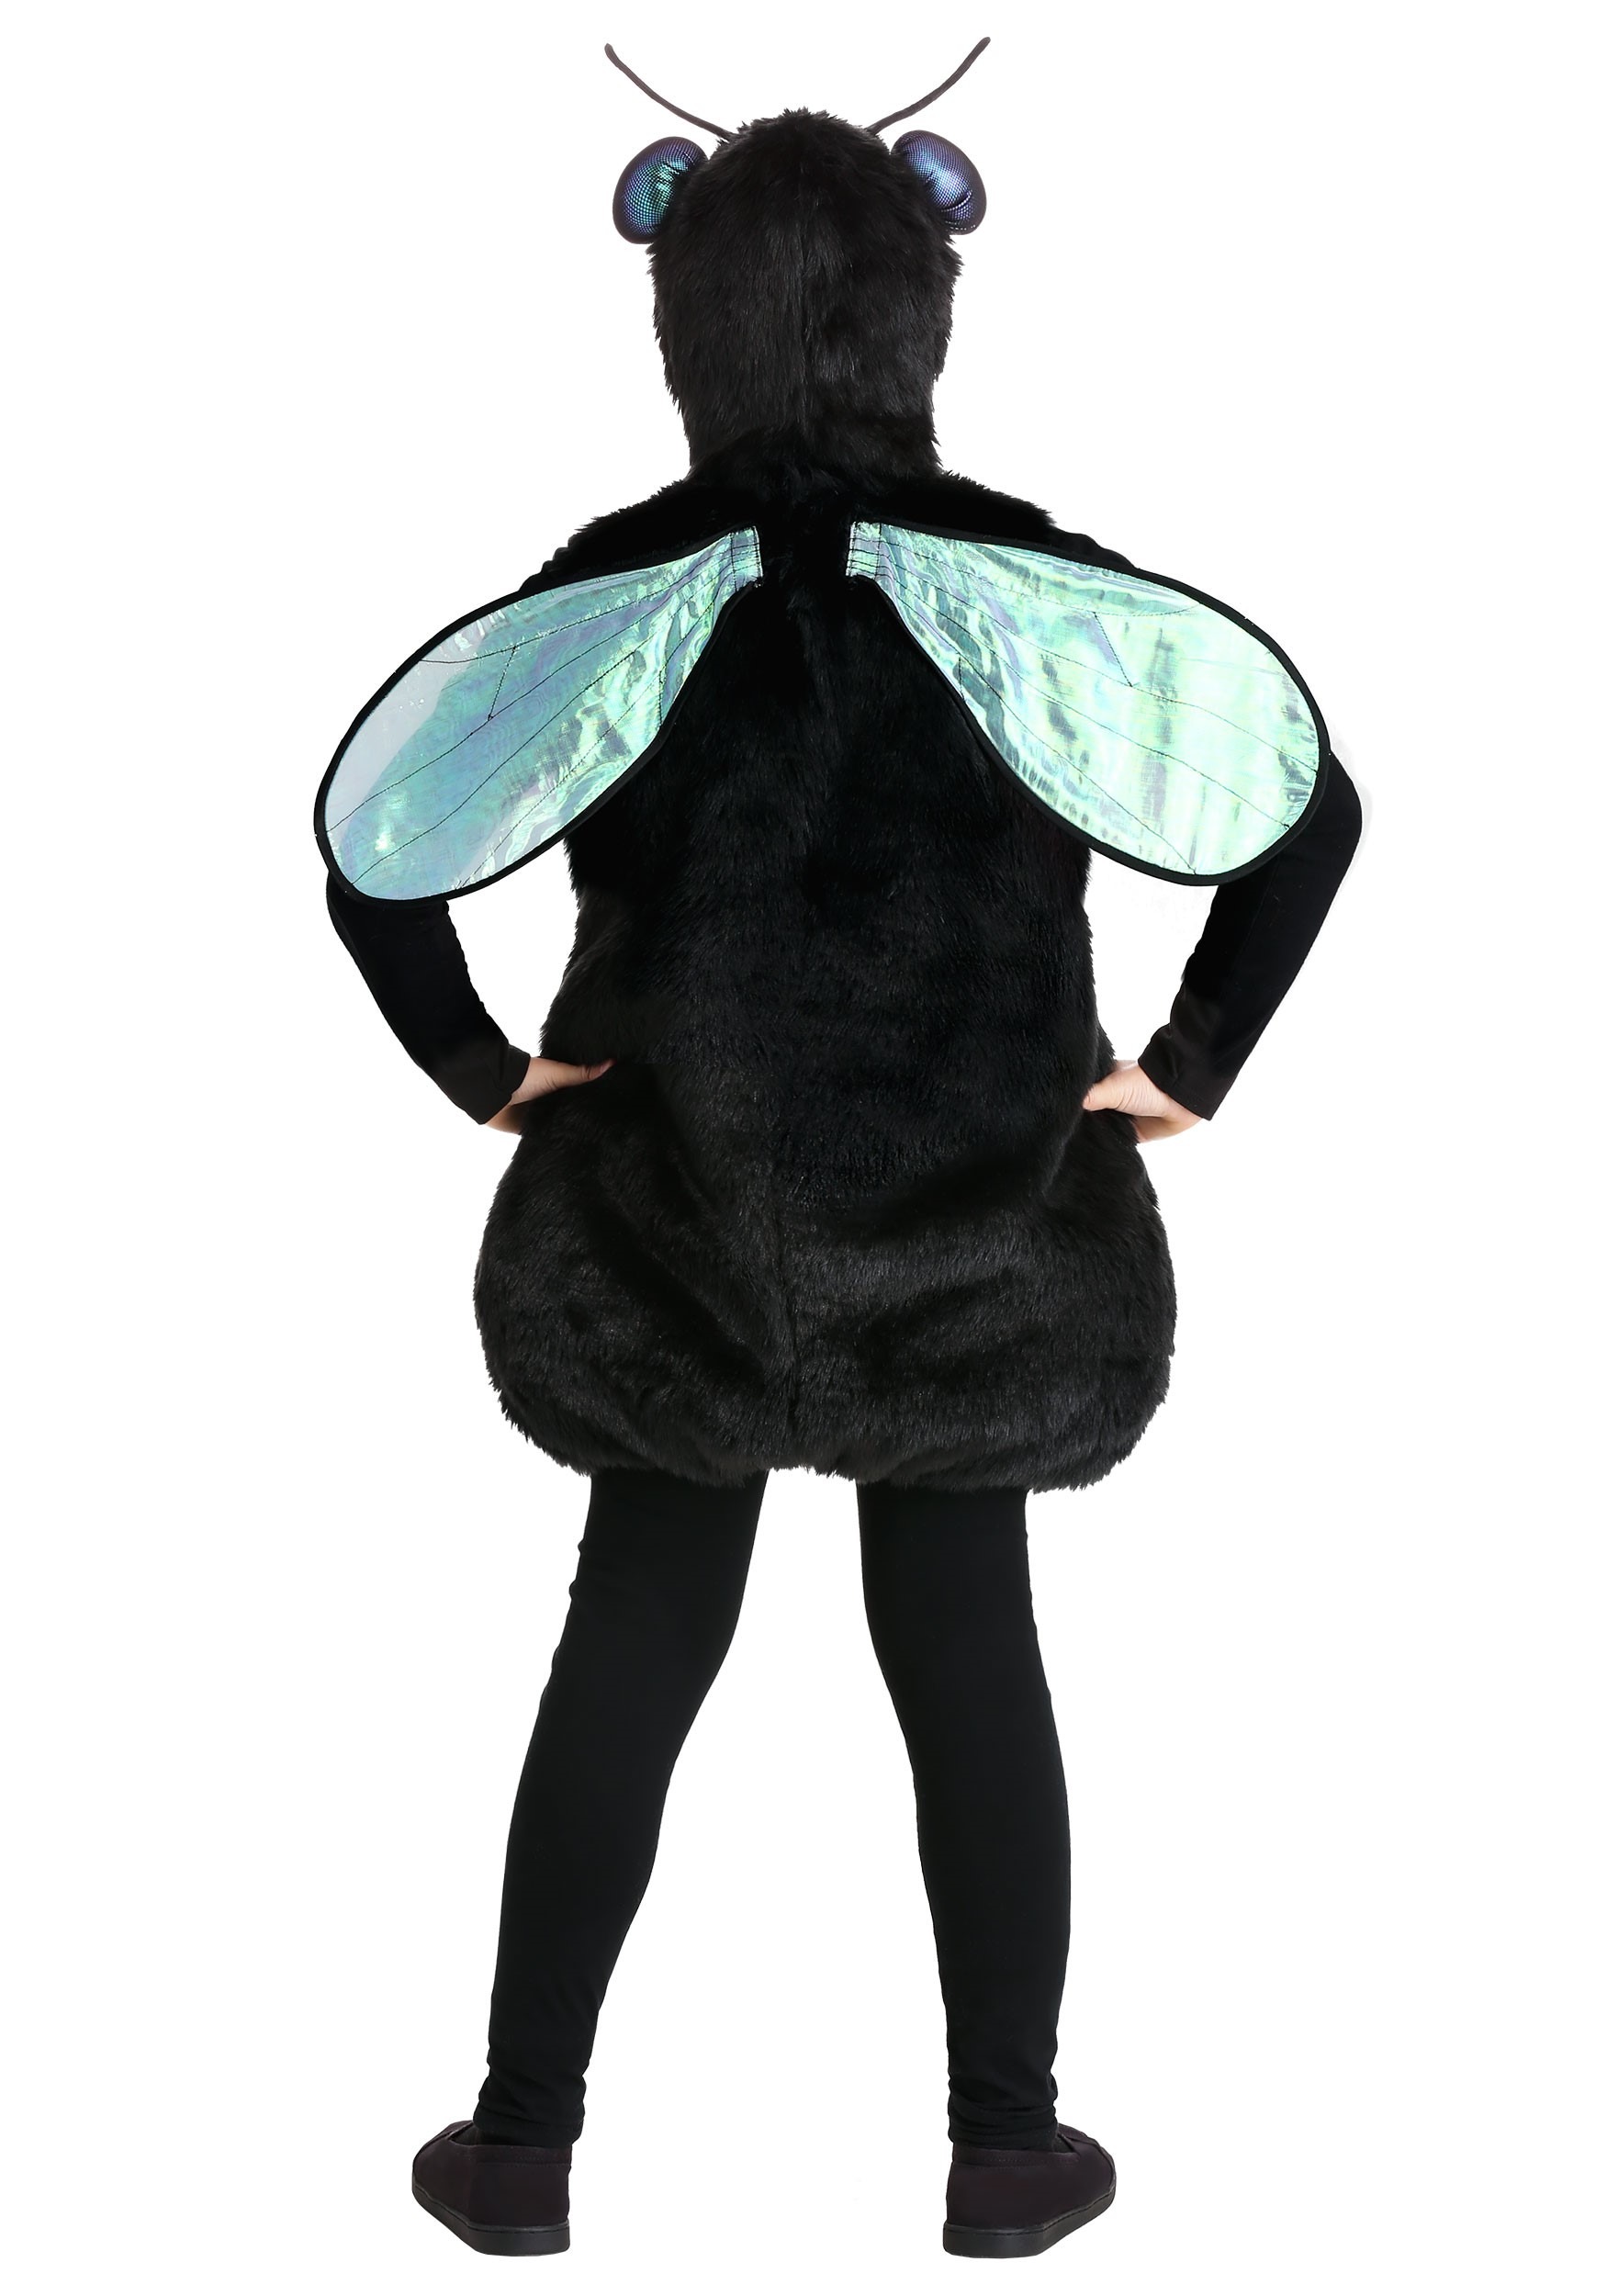 Black Fly Costume For Kids